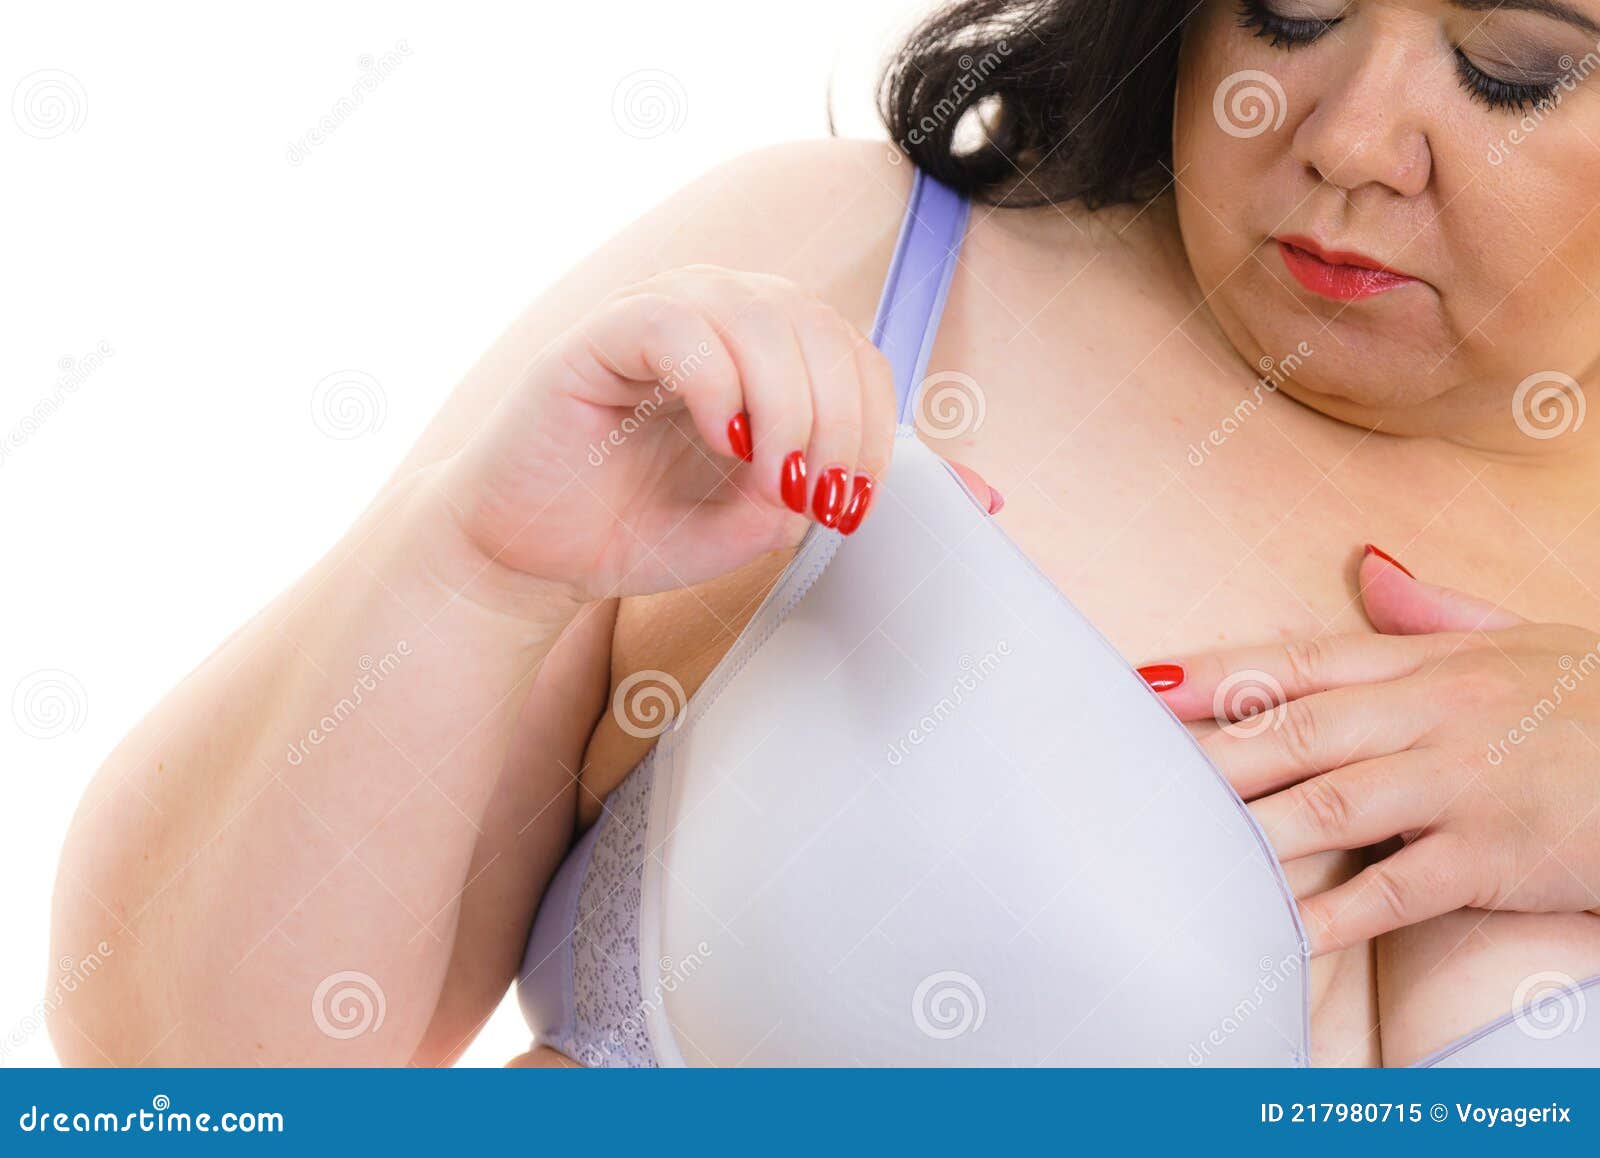 Fat Woman Big Breast Wearing Bra Stock Image - Image of touching, bust:  217980715